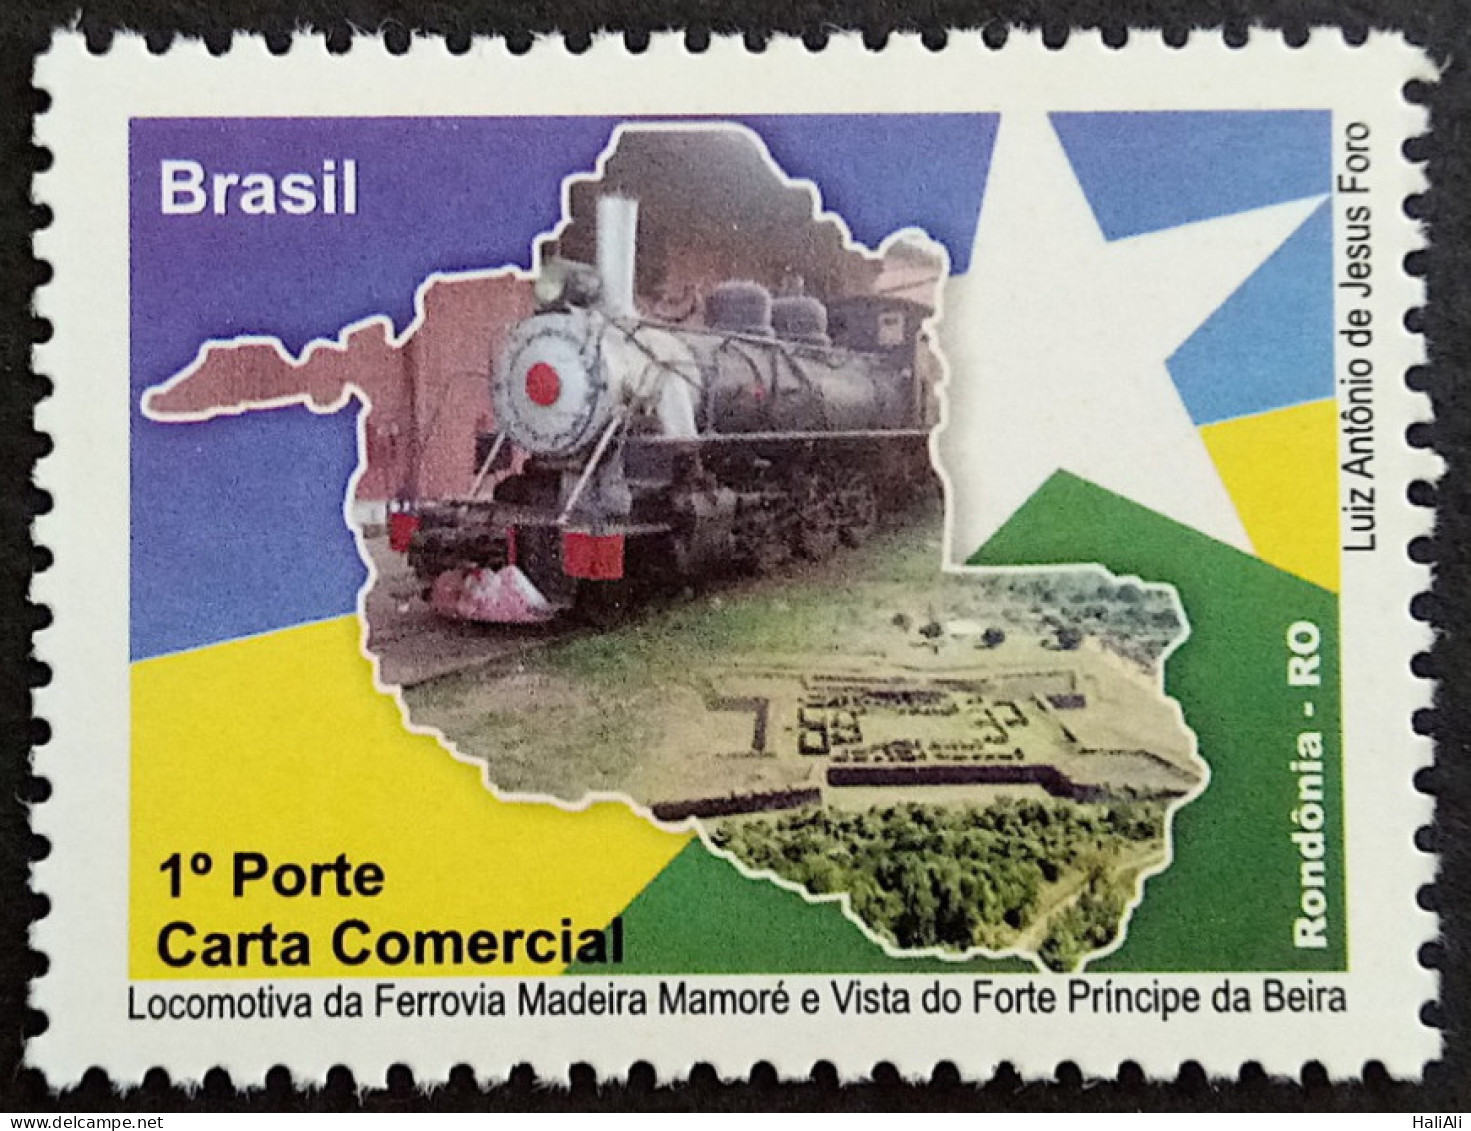 C 2926 Brazil Depersonalized Stamp Tourism Rondonia Train Map Flag Star 2009 - Gepersonaliseerde Postzegels